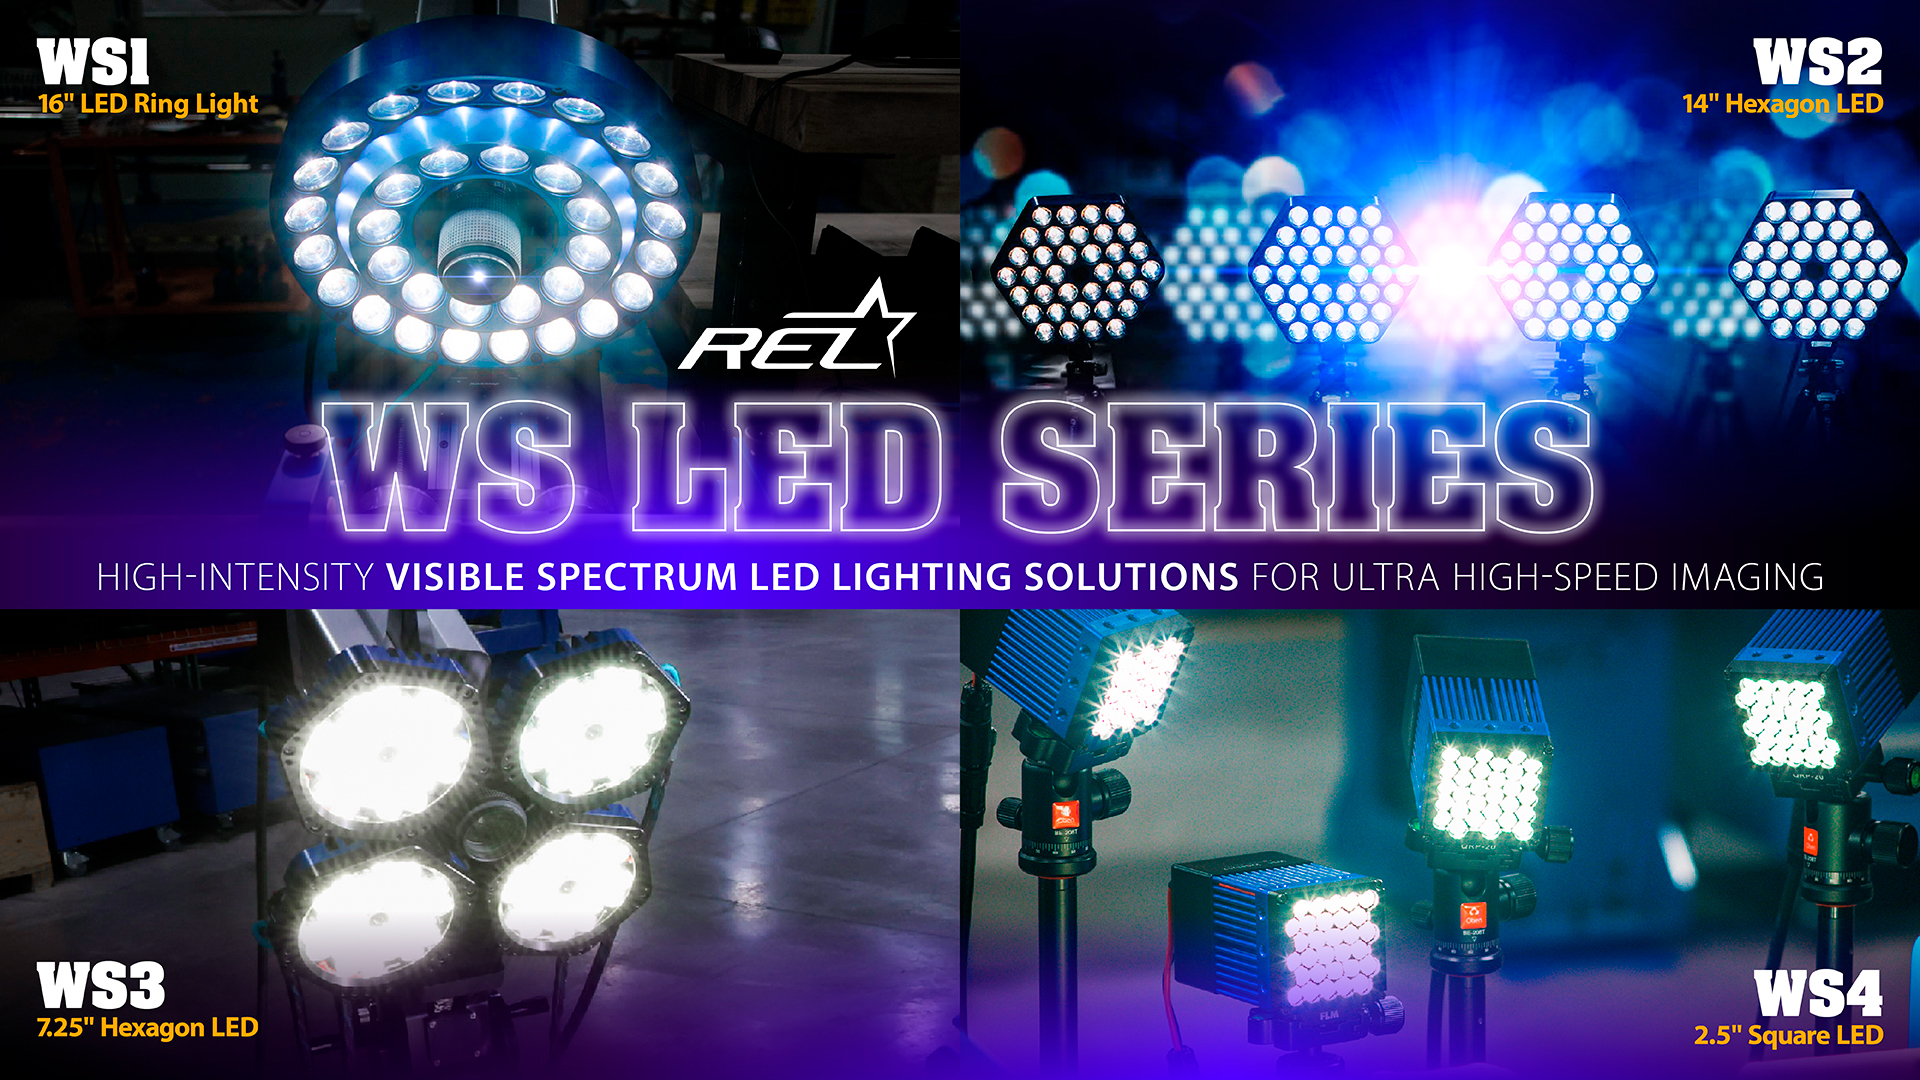 REL WS LED Series illustration.